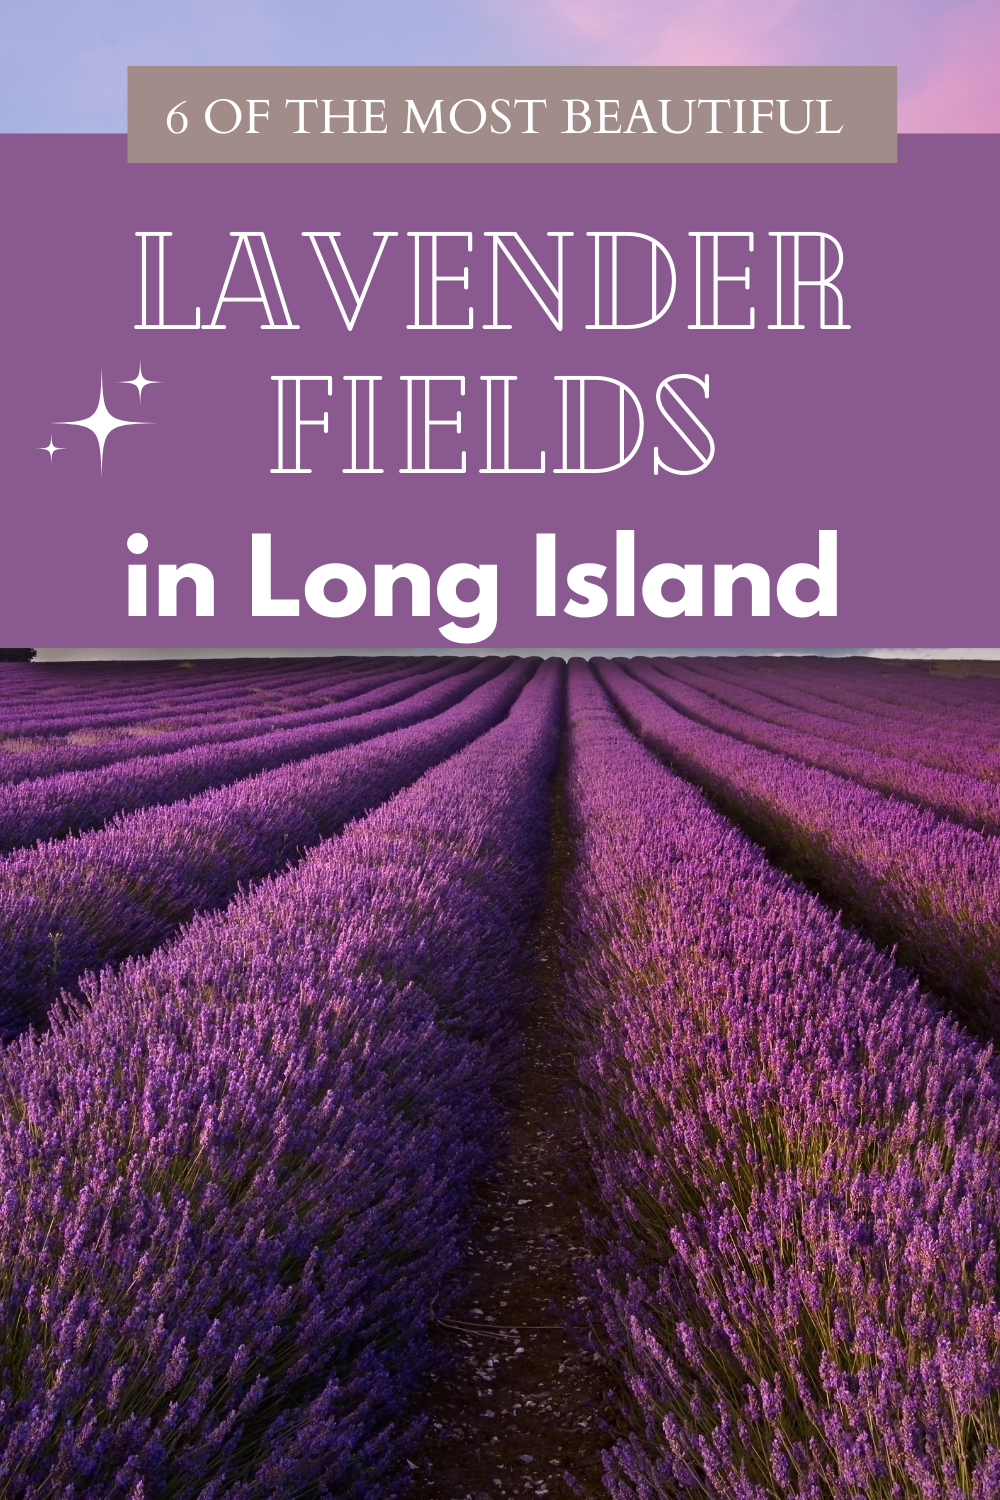 Lavender farms in Long Island